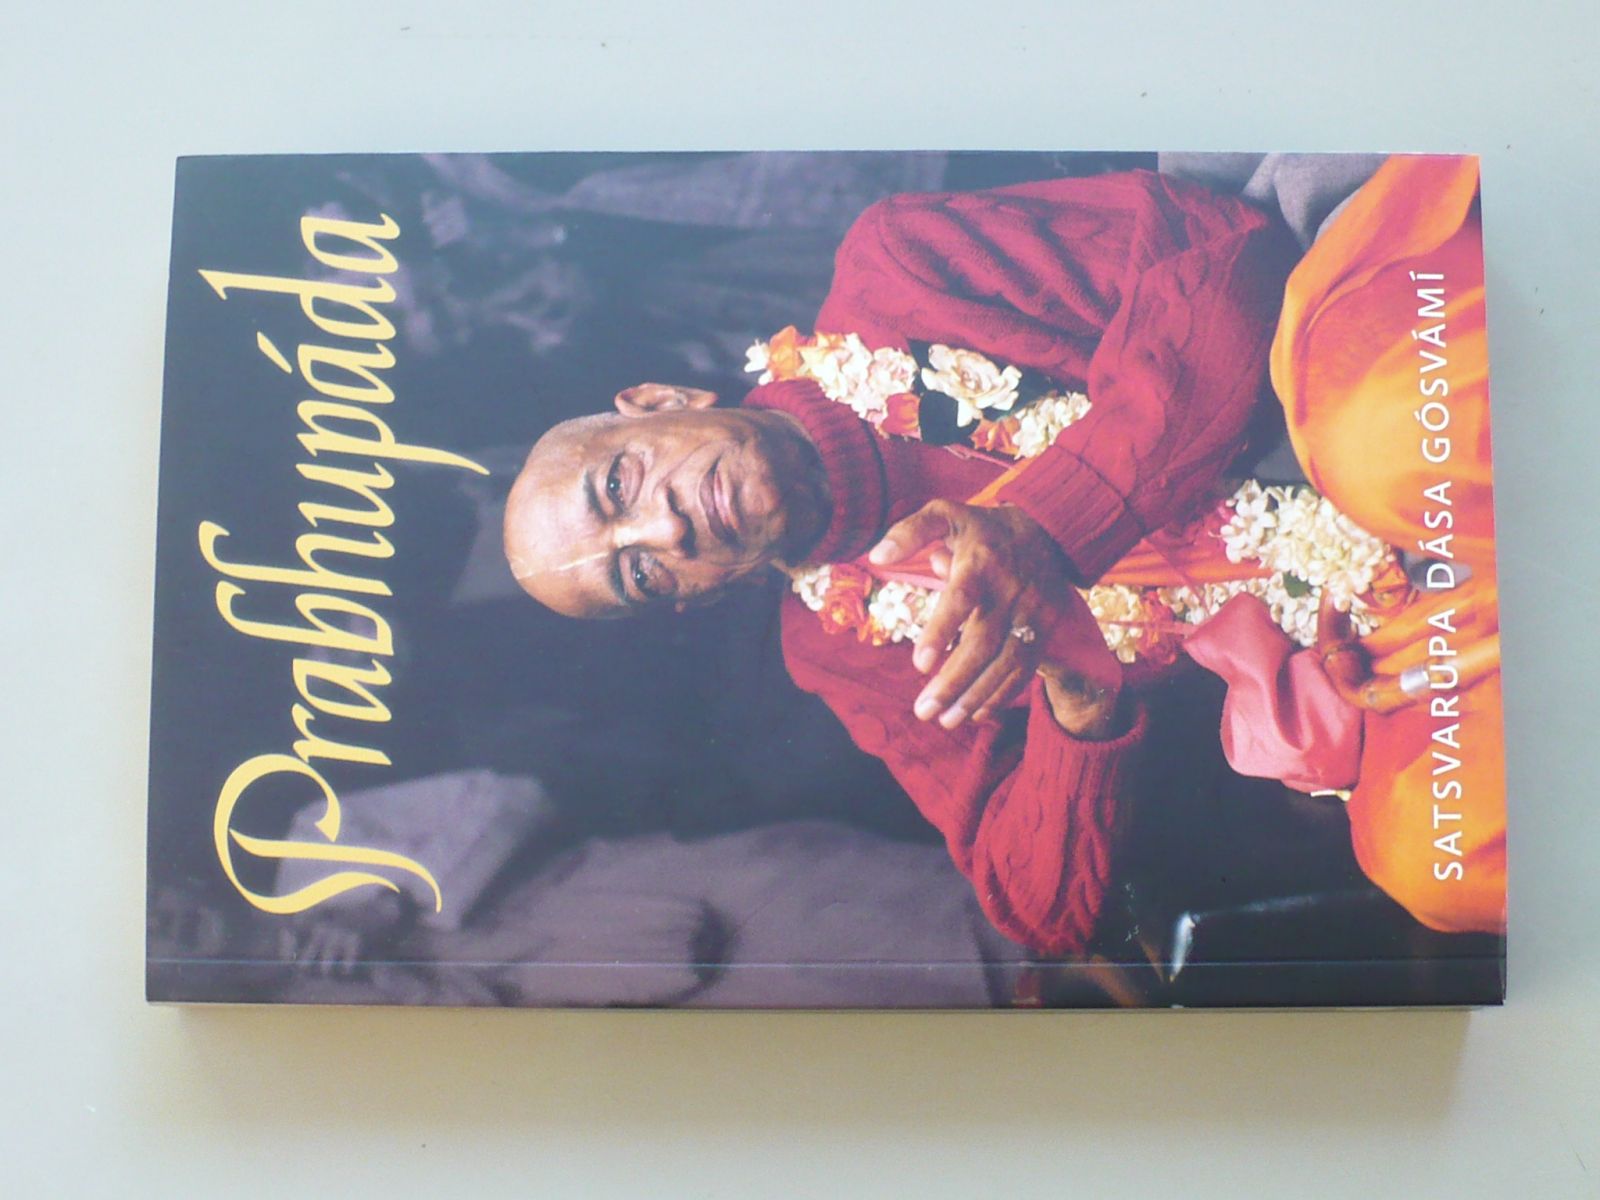 Prabhupáda - Satsvarúpa Dása Gósvámí (2001)